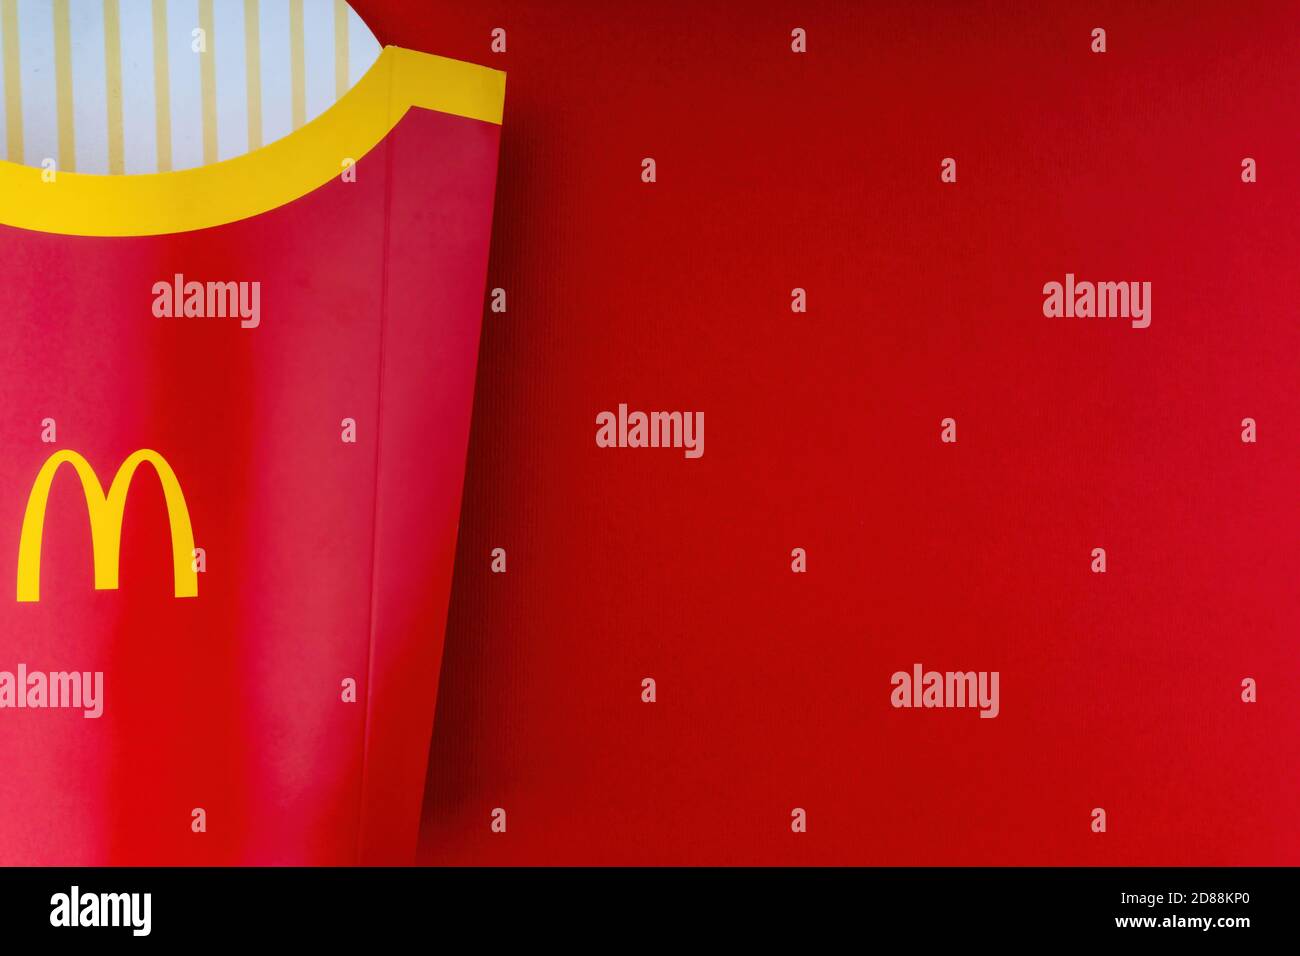 Kuala Lumpur, Malaysia - October 20, 2020 : McDonalds french fries box on red background Stock Photo